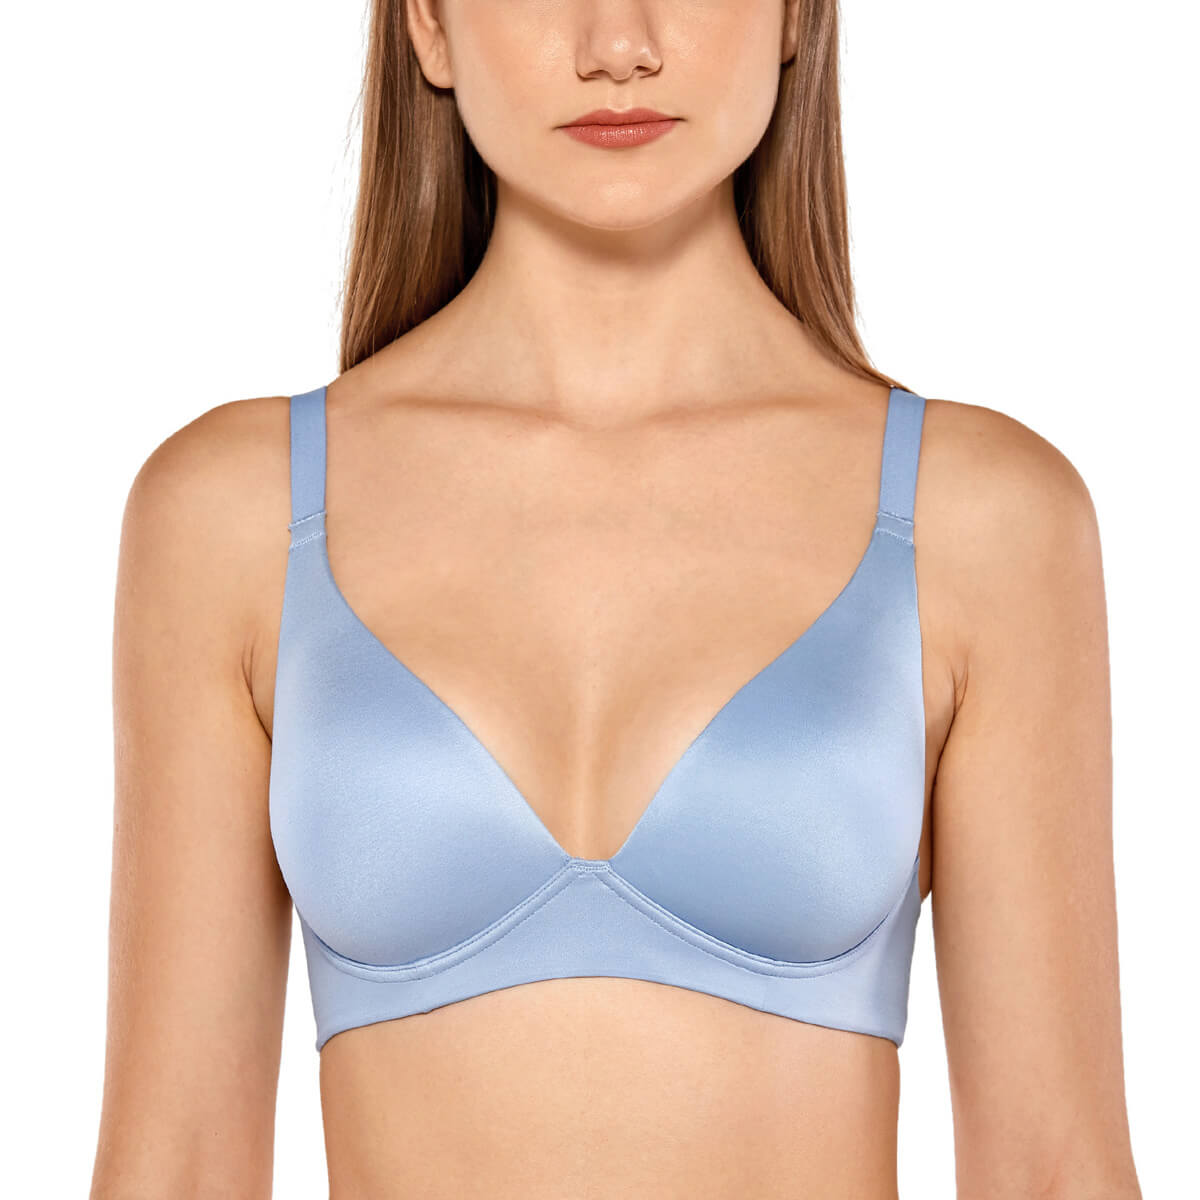 Plunge Bra Size 42A online, Triangle bras